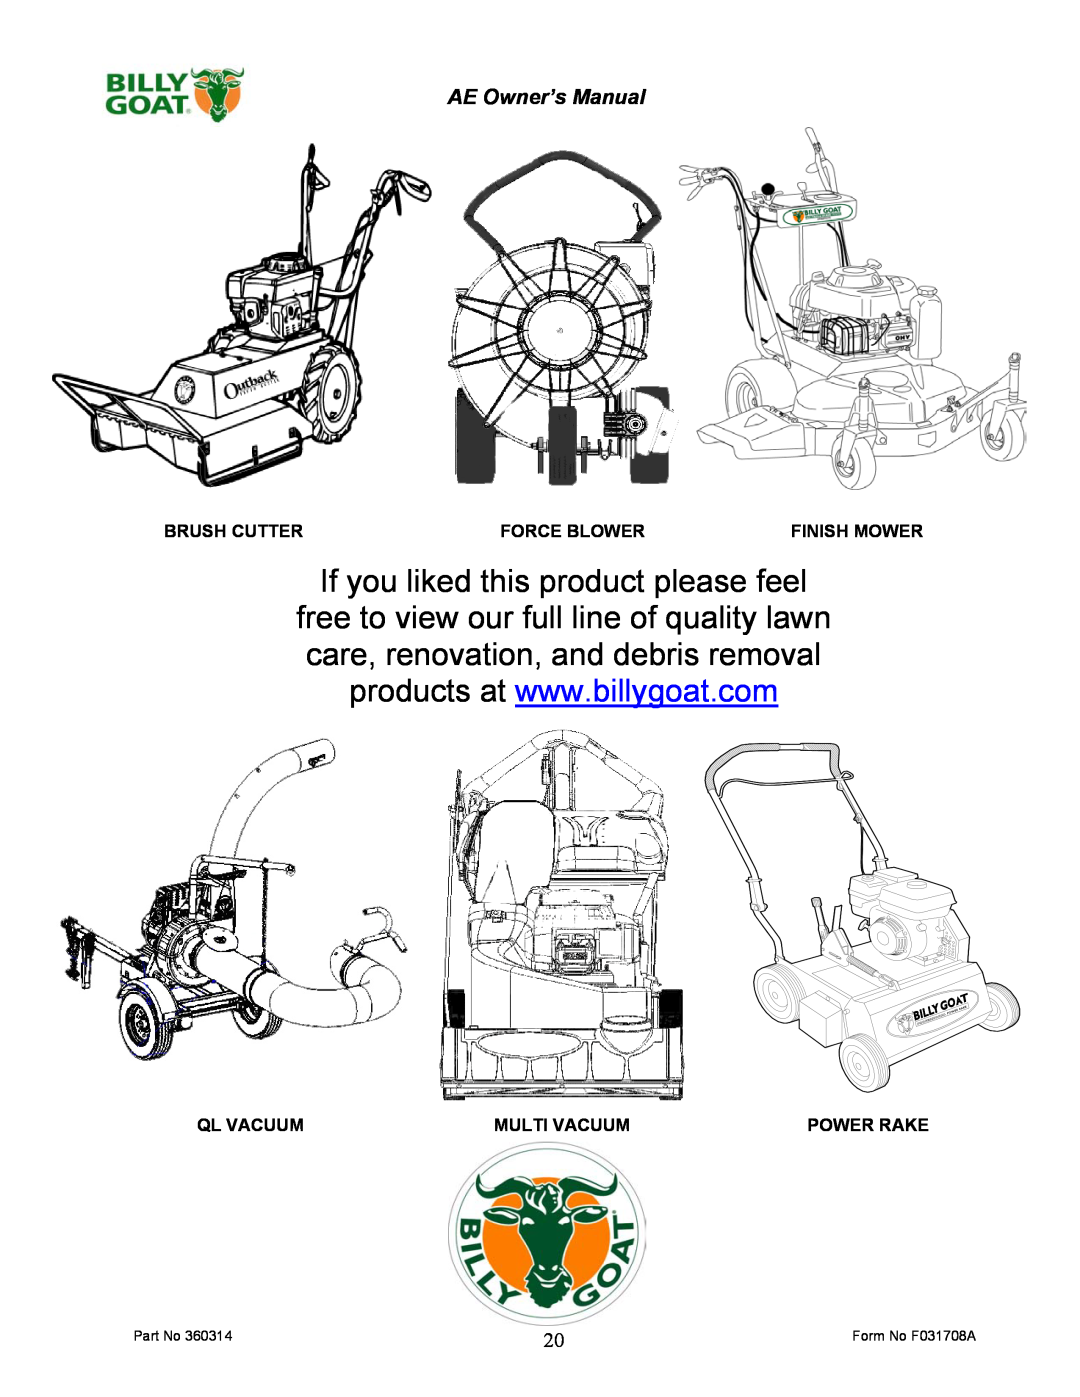 Billy Goat AE401HST AE Owner’s Manual, Brush Cutter, Force Blower, Finish Mower, Ql Vacuum, Multi Vacuum, Power Rake 